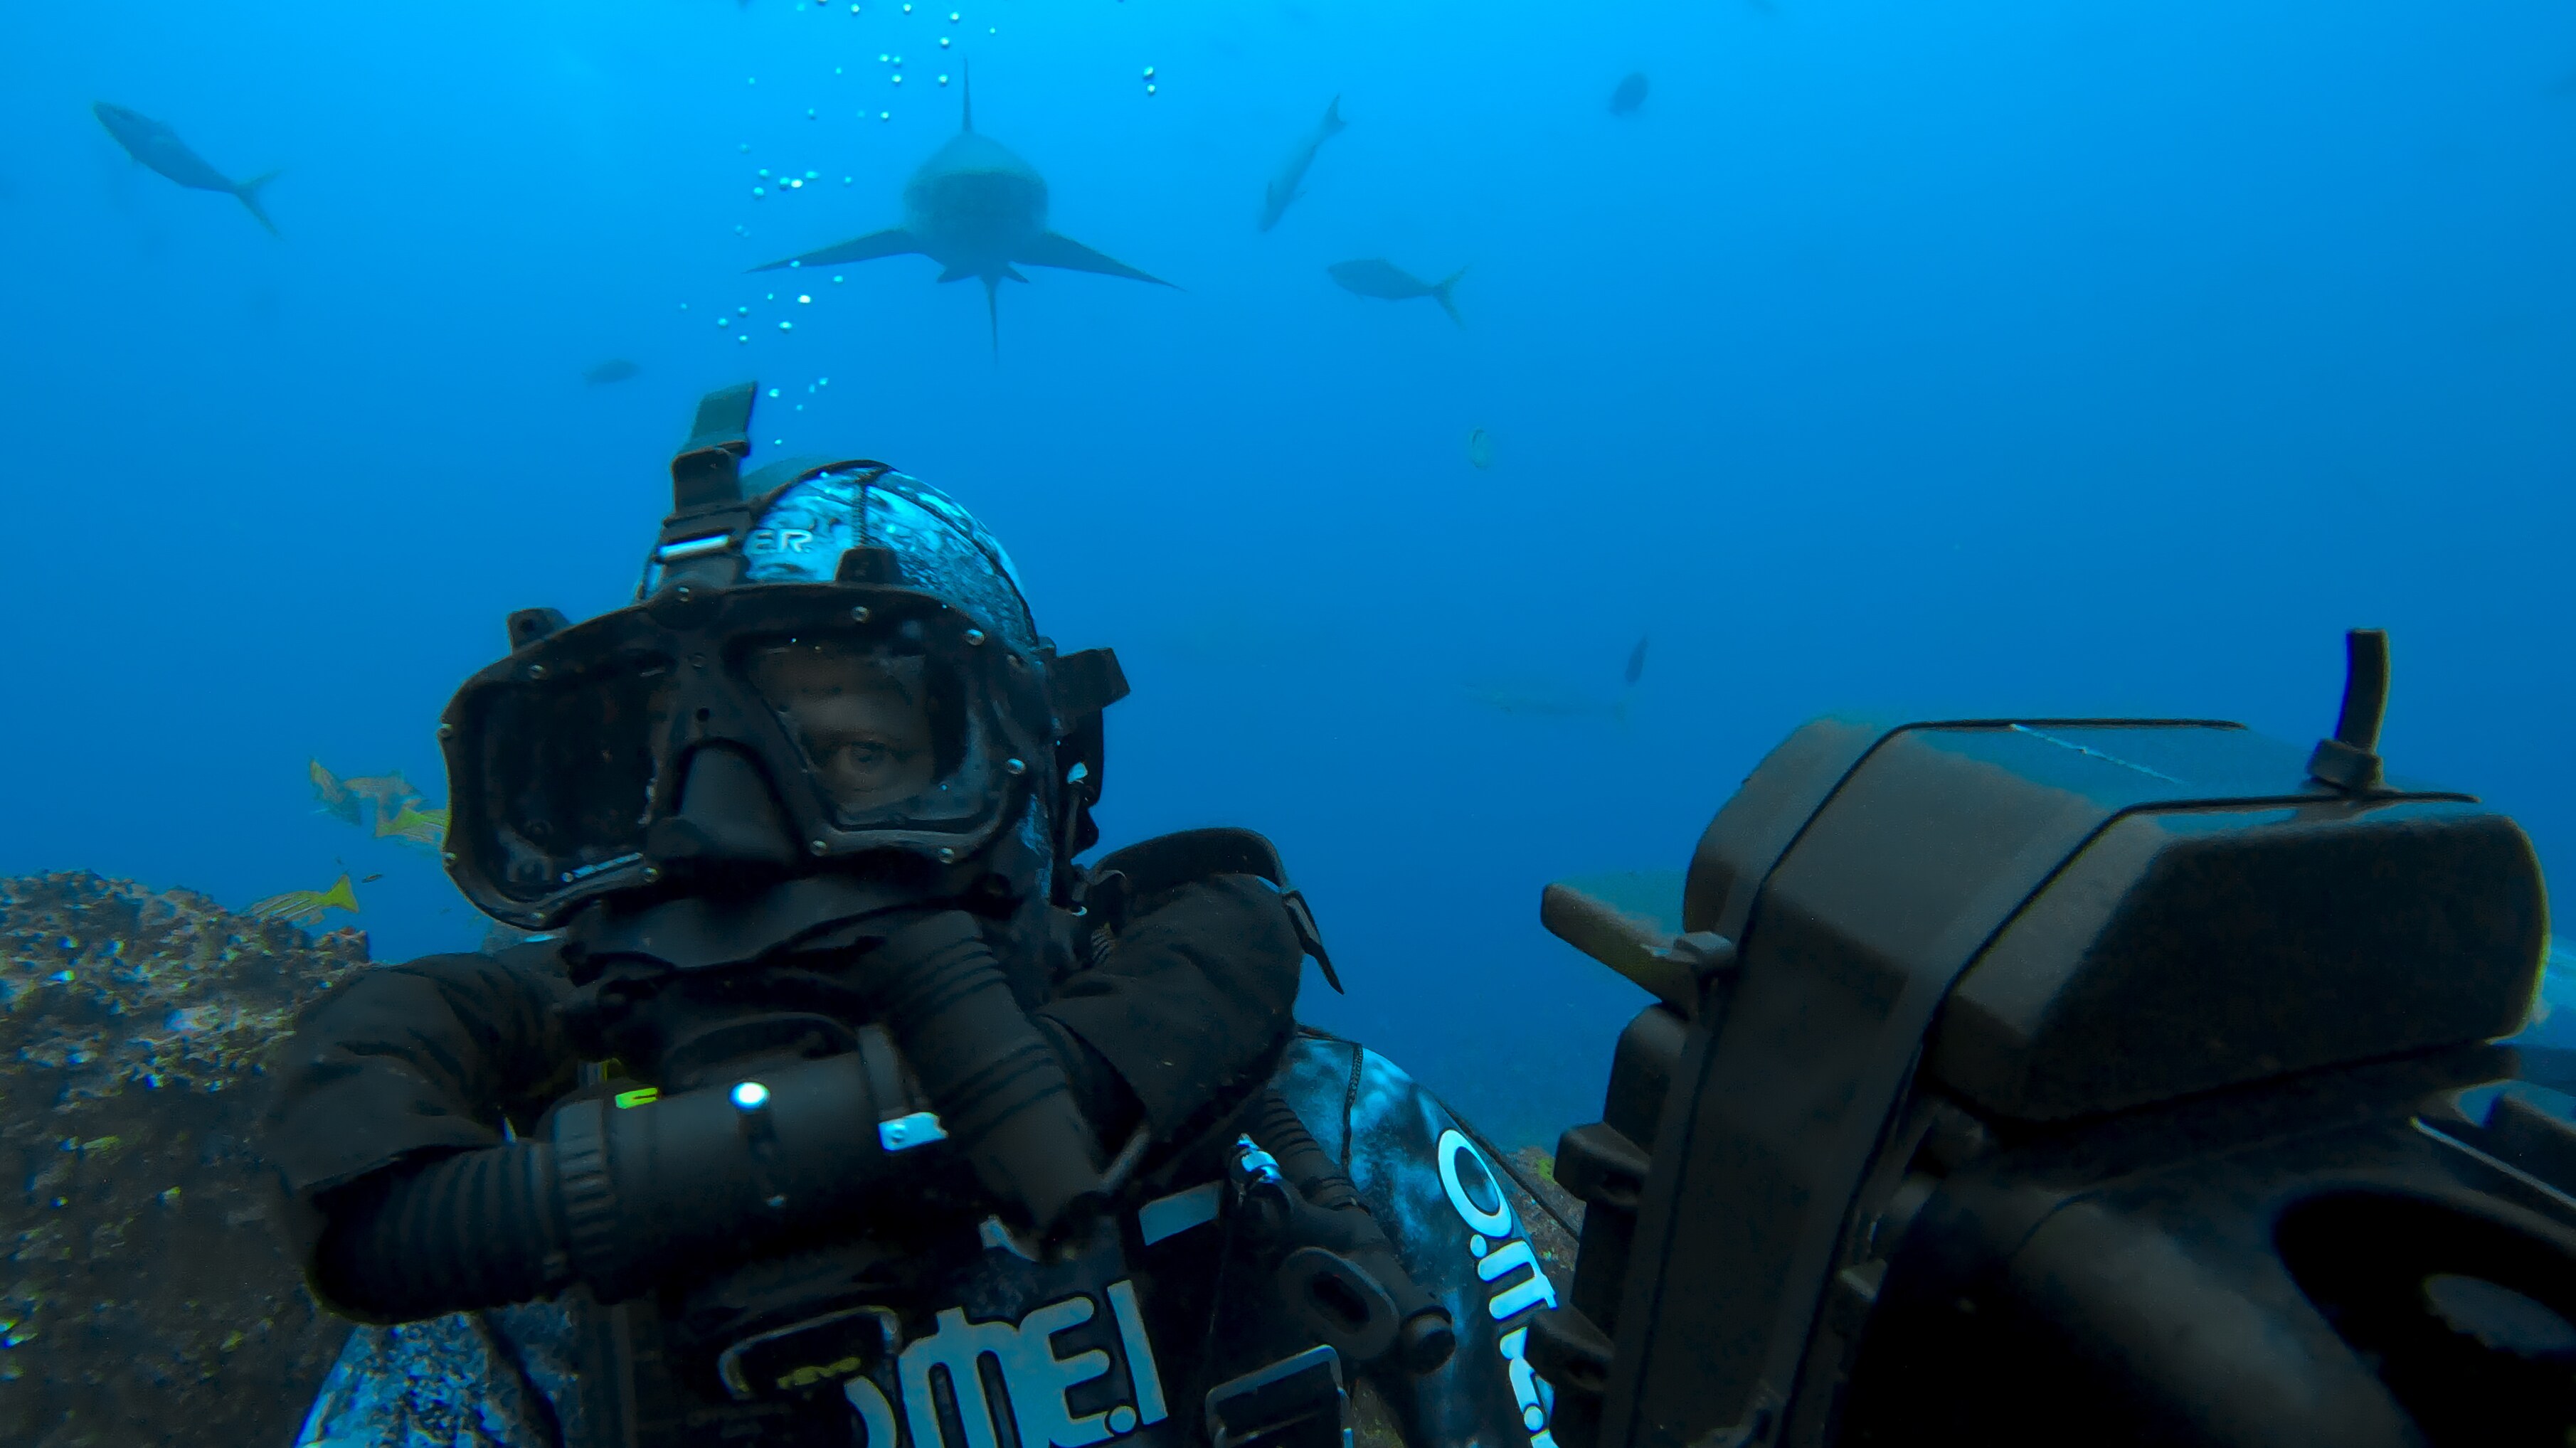 Bertie Gregory filming in shark filled waters. (Credit: National Geographic/Bertie Gregory for Disney+)